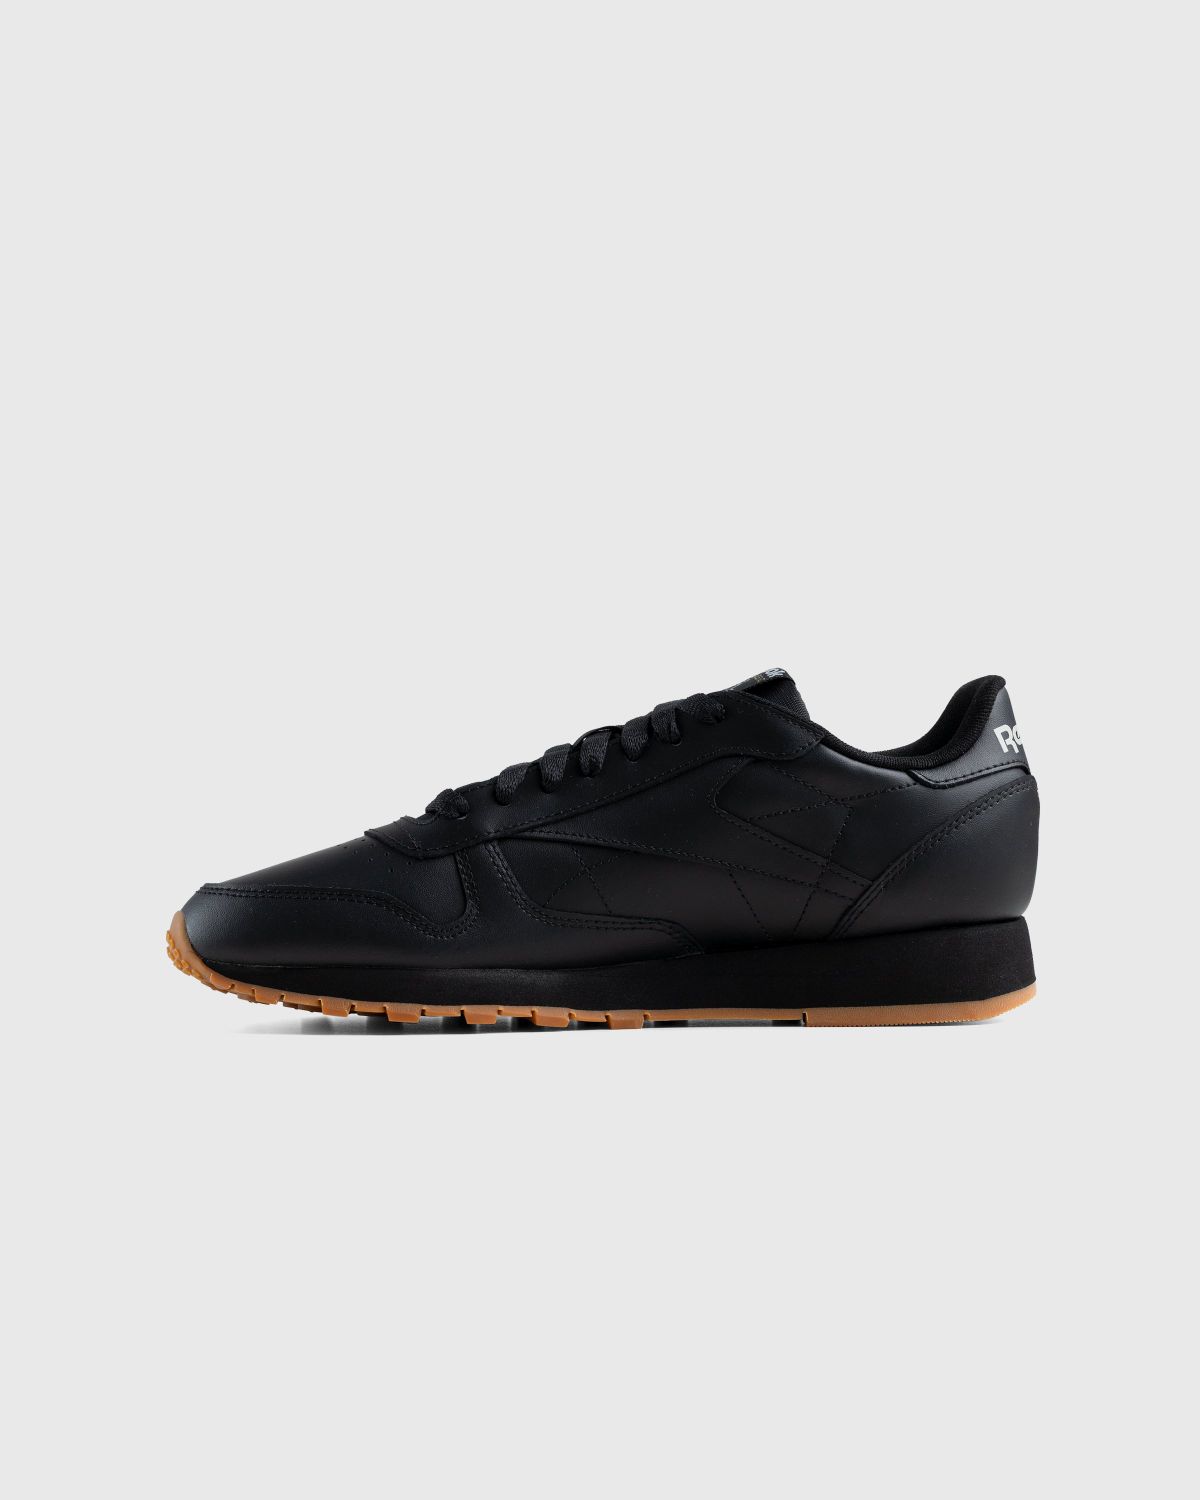 Reebok – Classic Leather Black - Low Top Sneakers - Black - Image 4